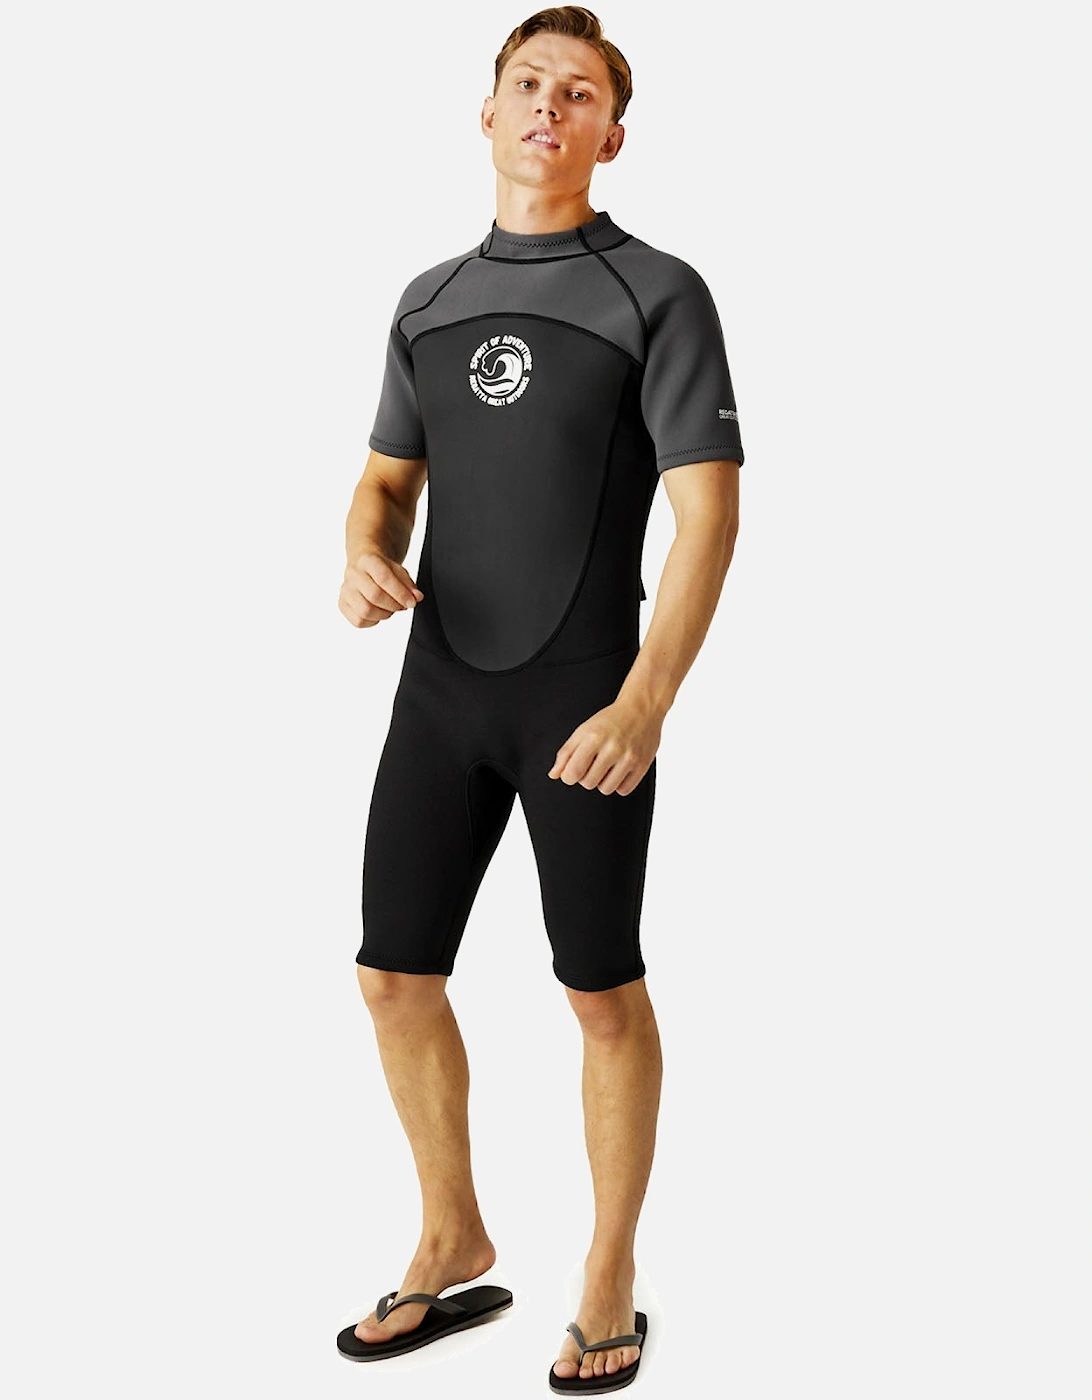 Mens Light Weight Quick Drying Short Wetsuit